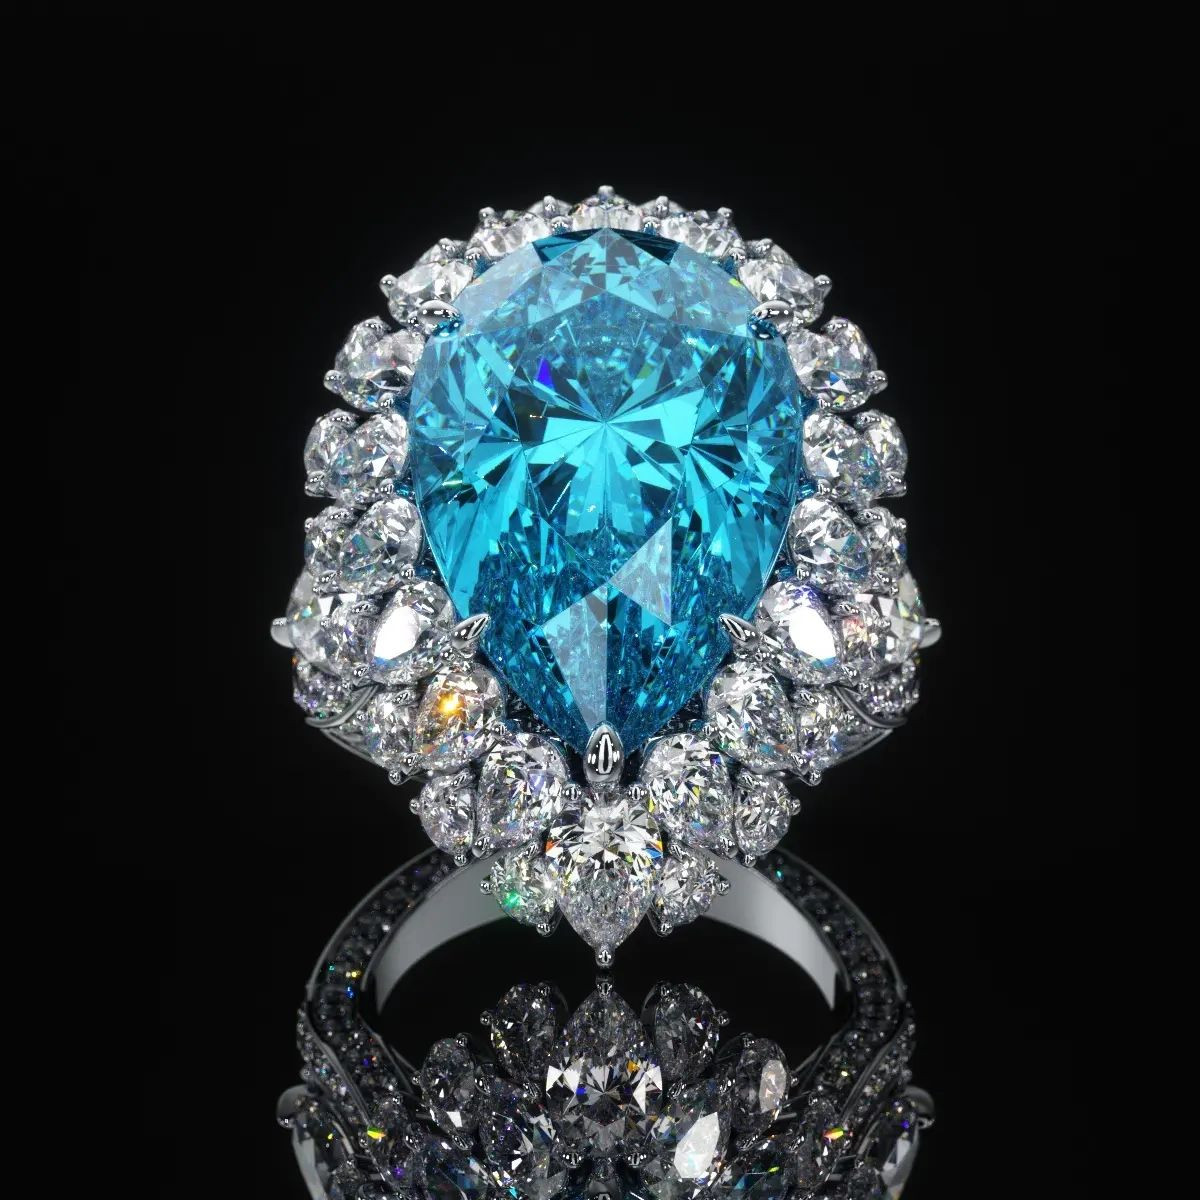 10ct Halo Pear Cut Aquamarine Engagement Ring | SayaBling Jewelry